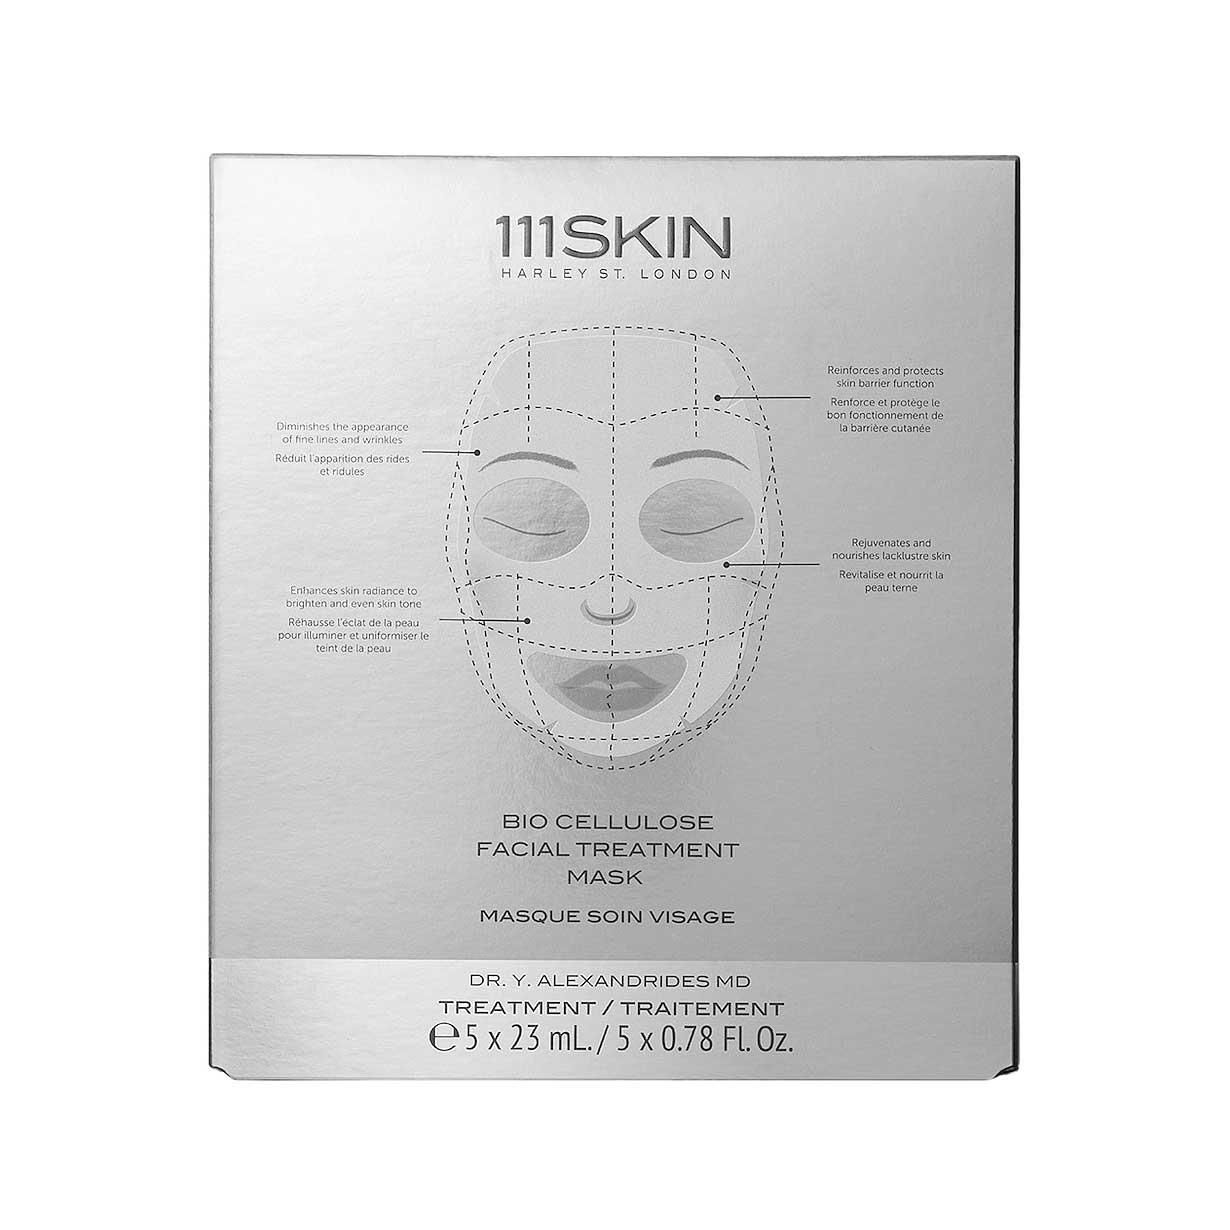 111skin bio cellulose facial treatment mask